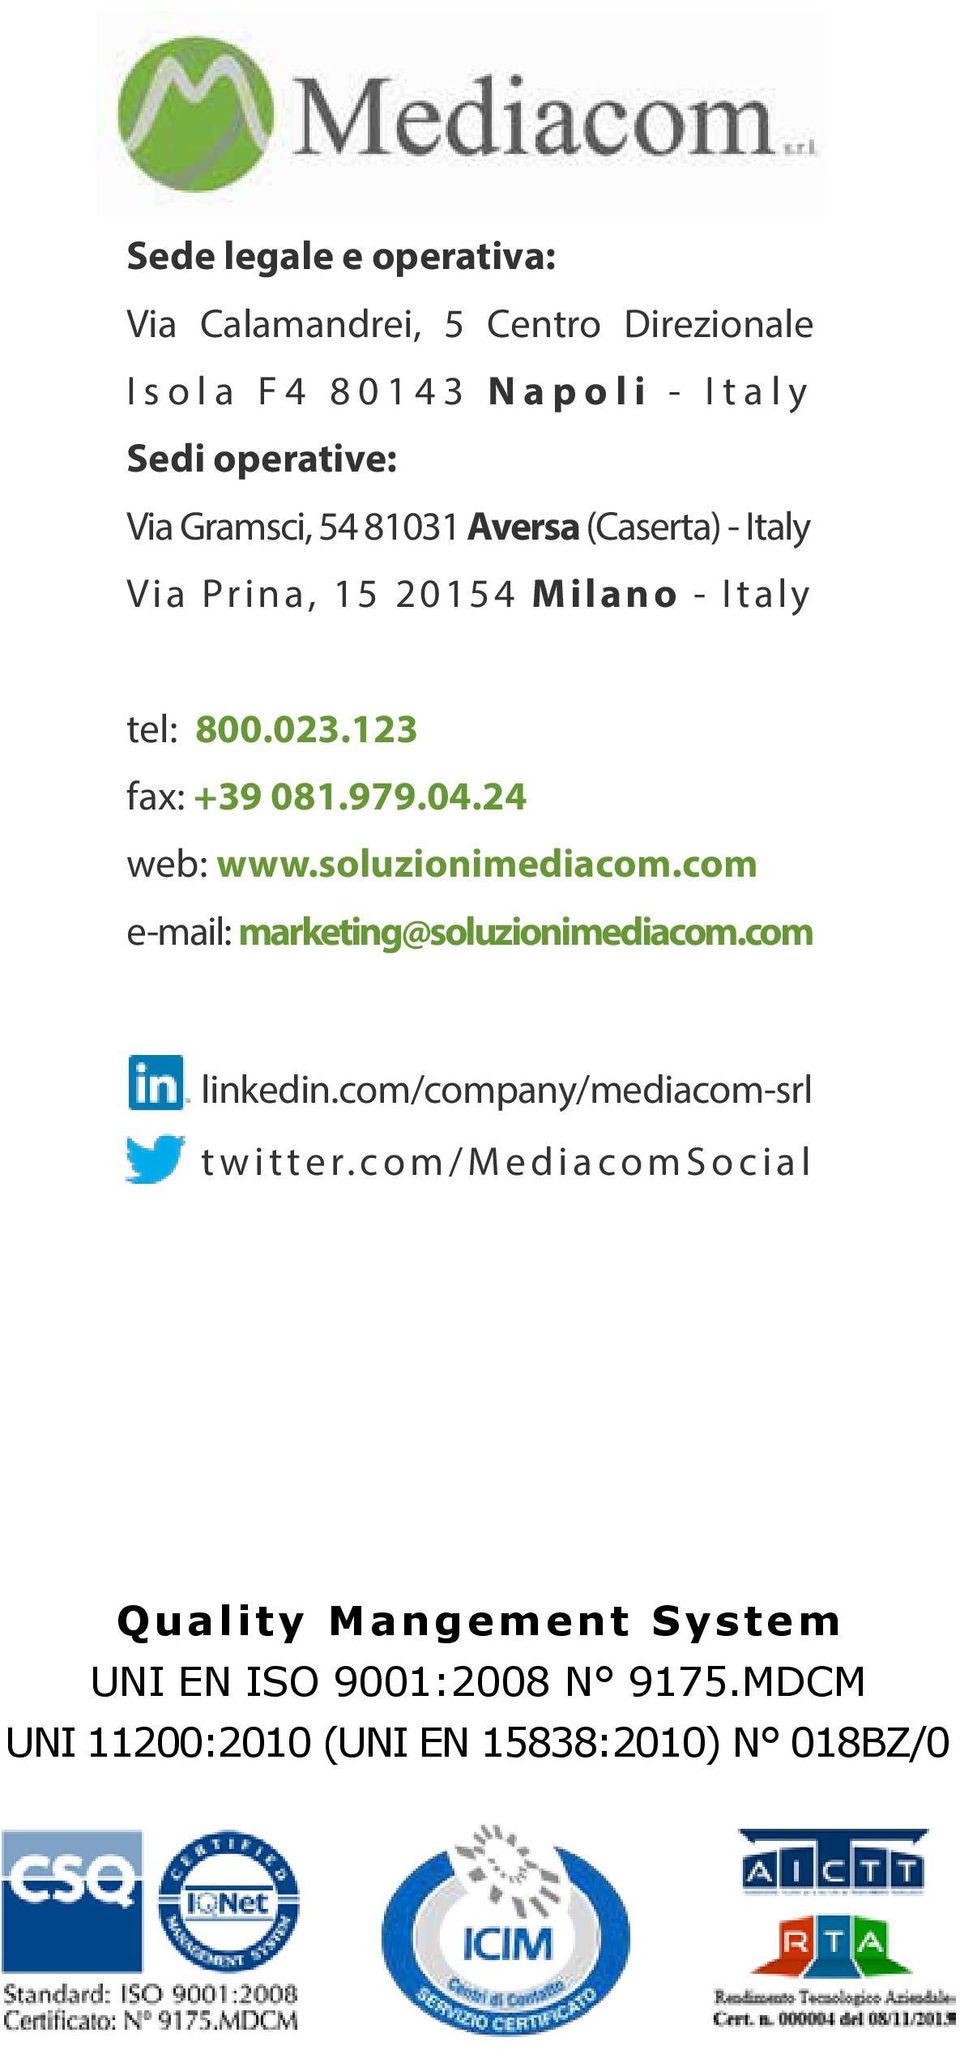 24 web: www.soluzionimediacom.com e-mail: marketing@soluzionimediacom.com linkedin.com/company/mediacom-srl twitter.